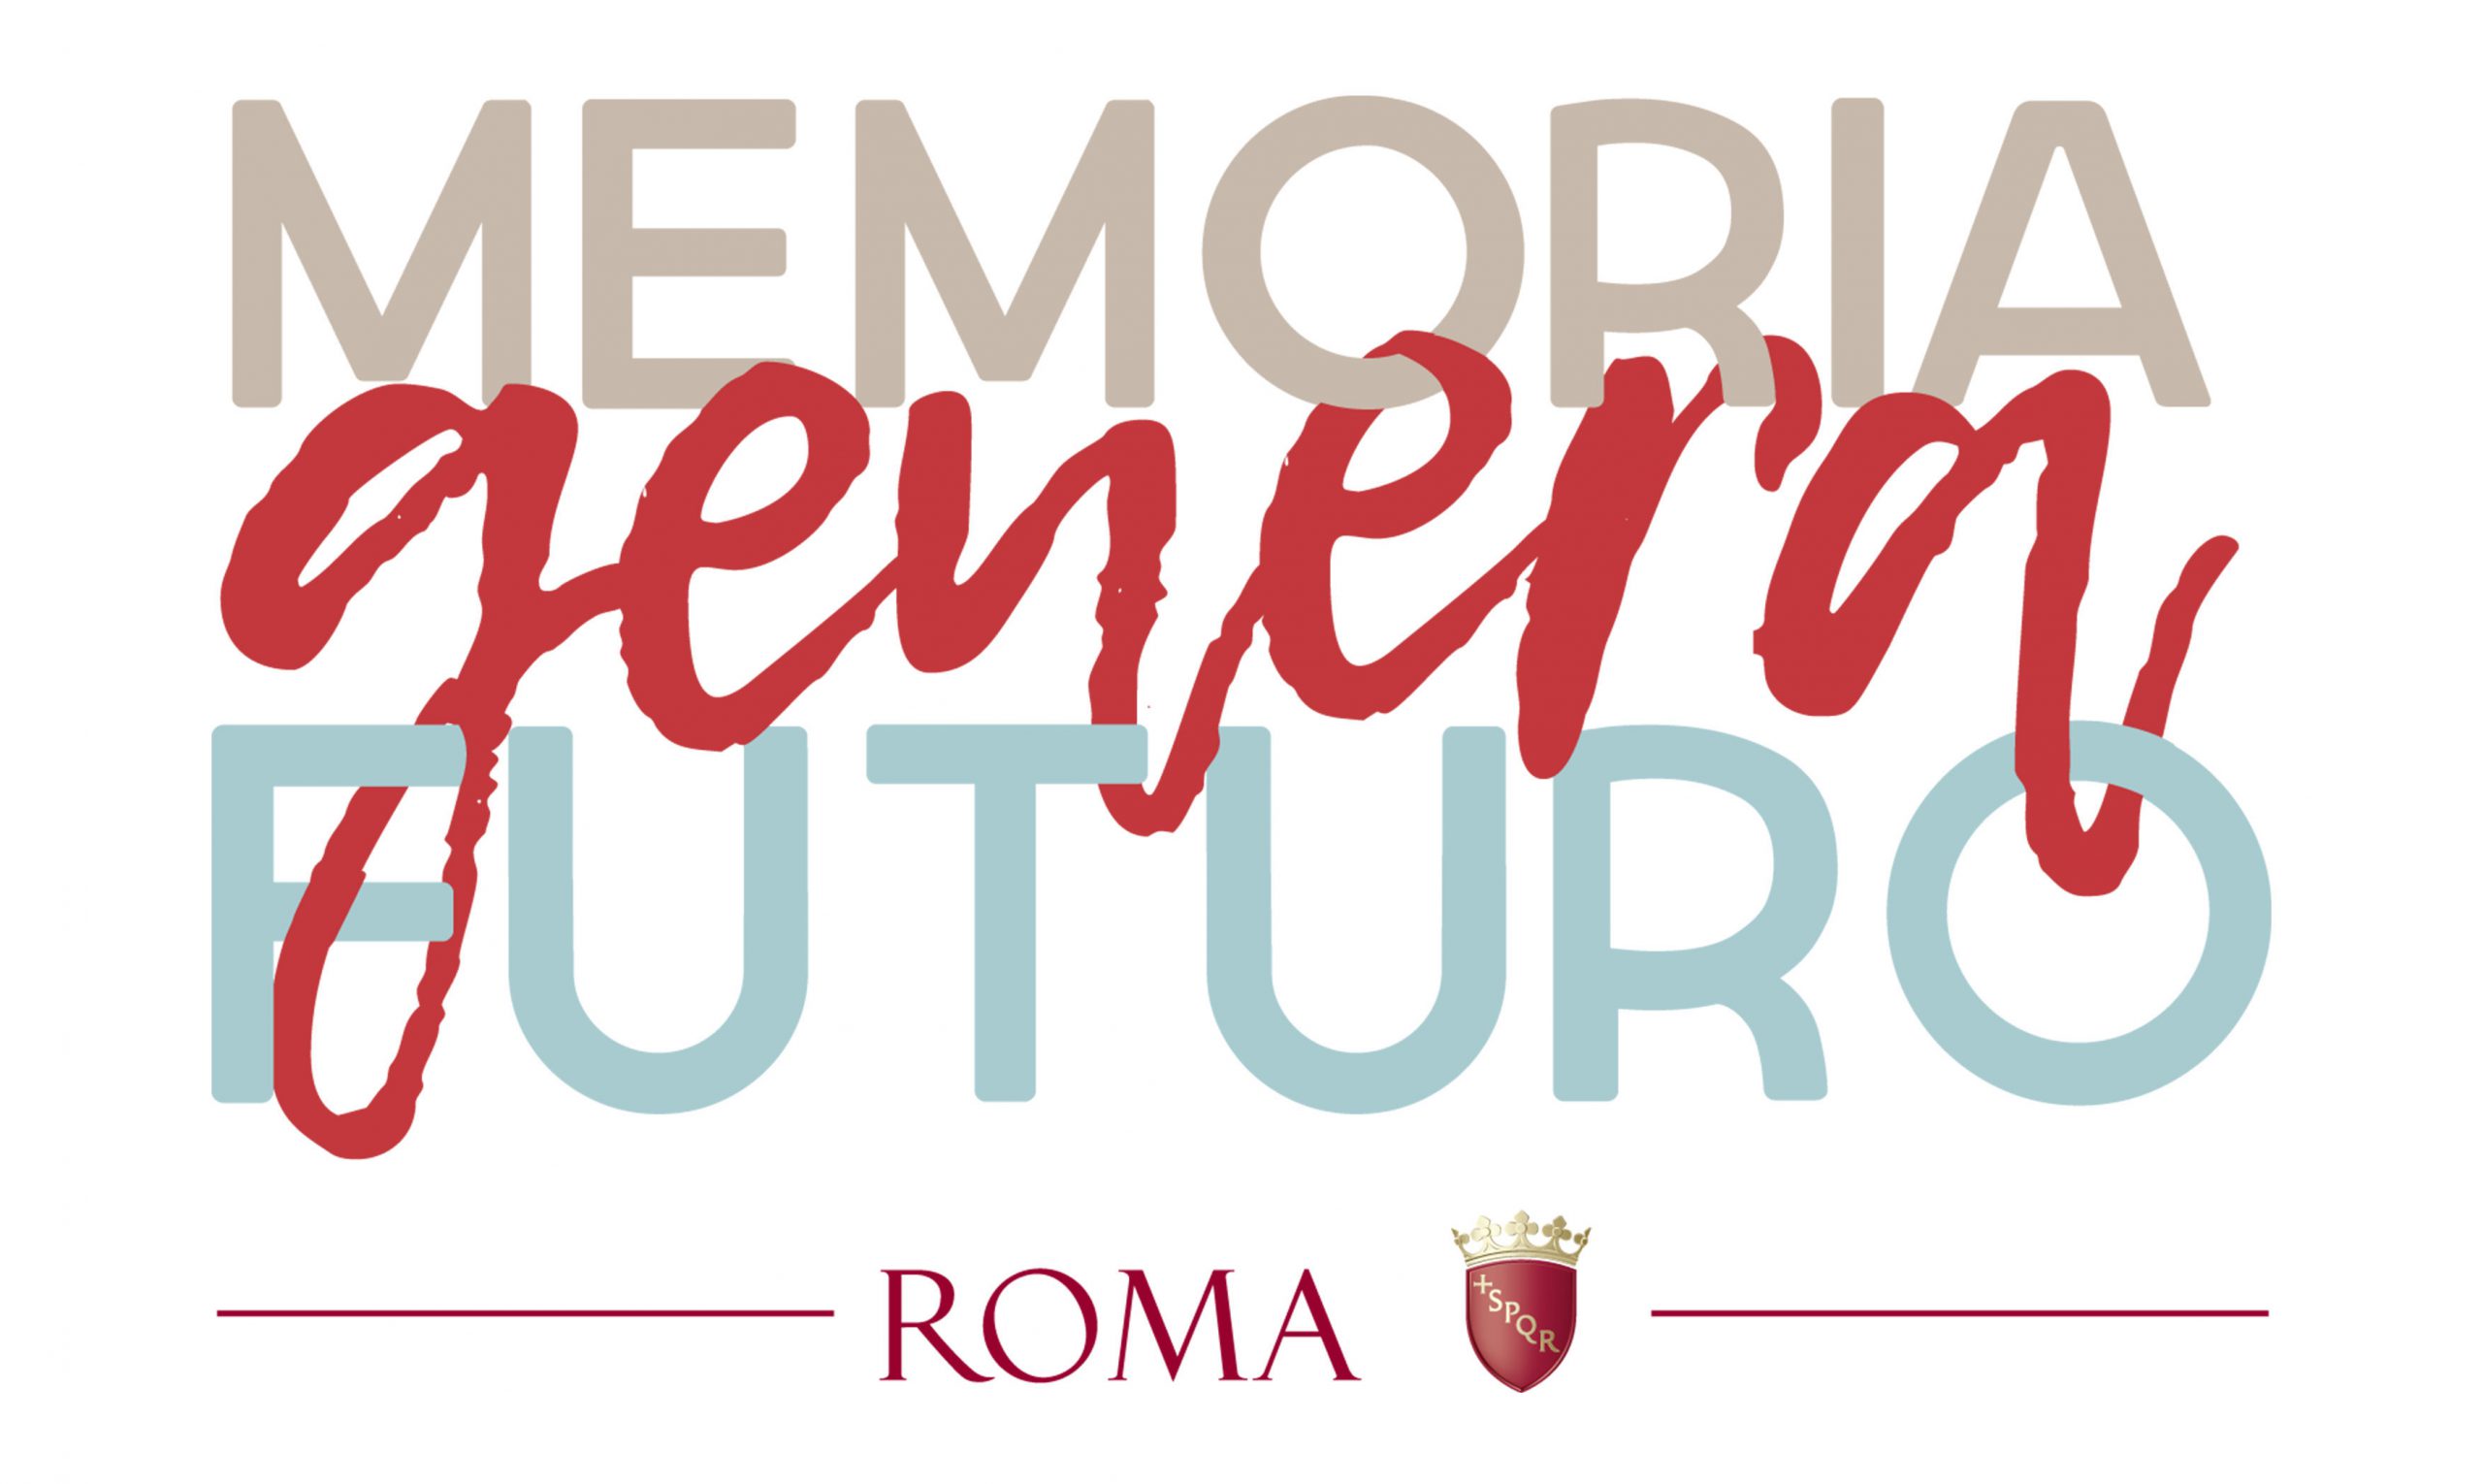 Logo Memoria genera futuro